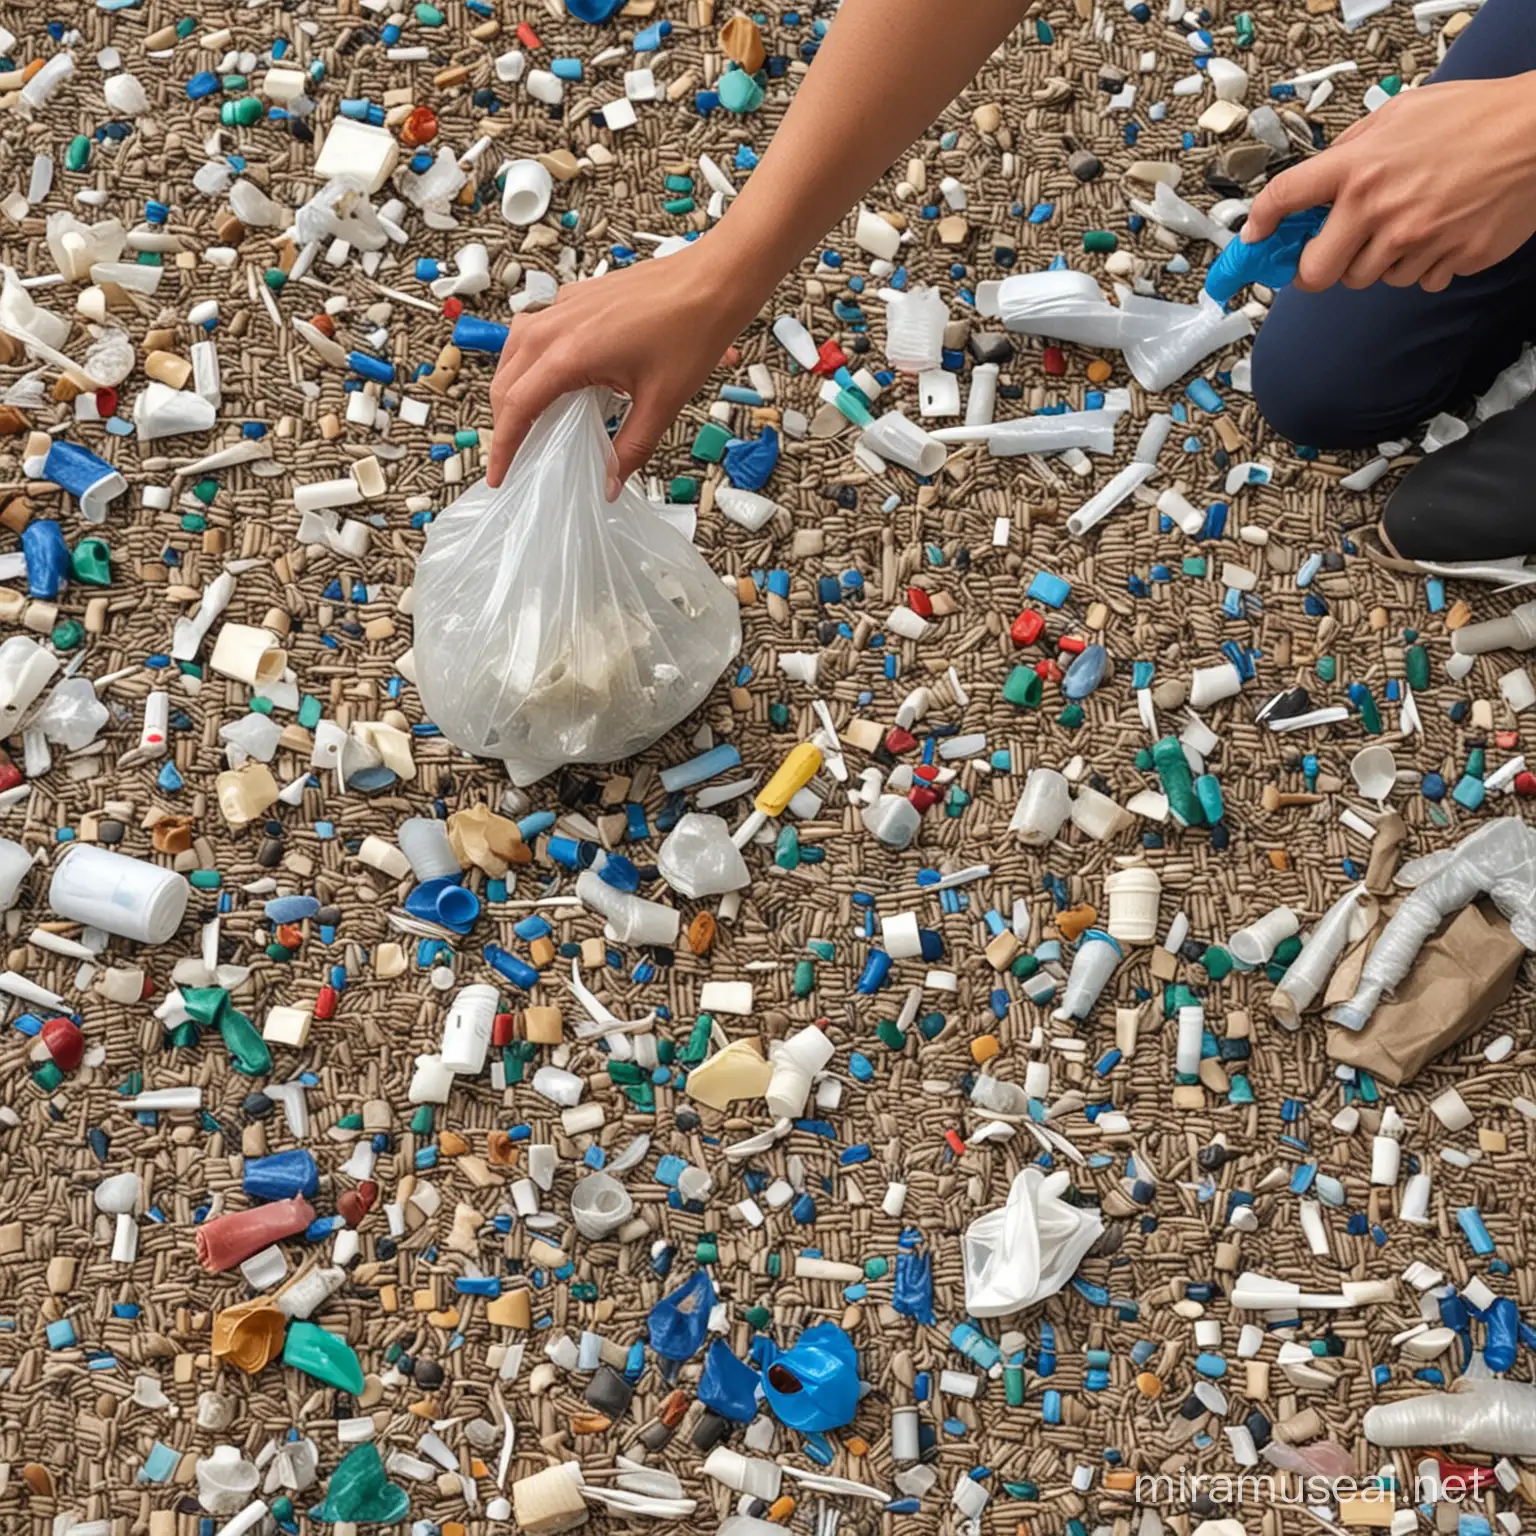 removing plastic waste
